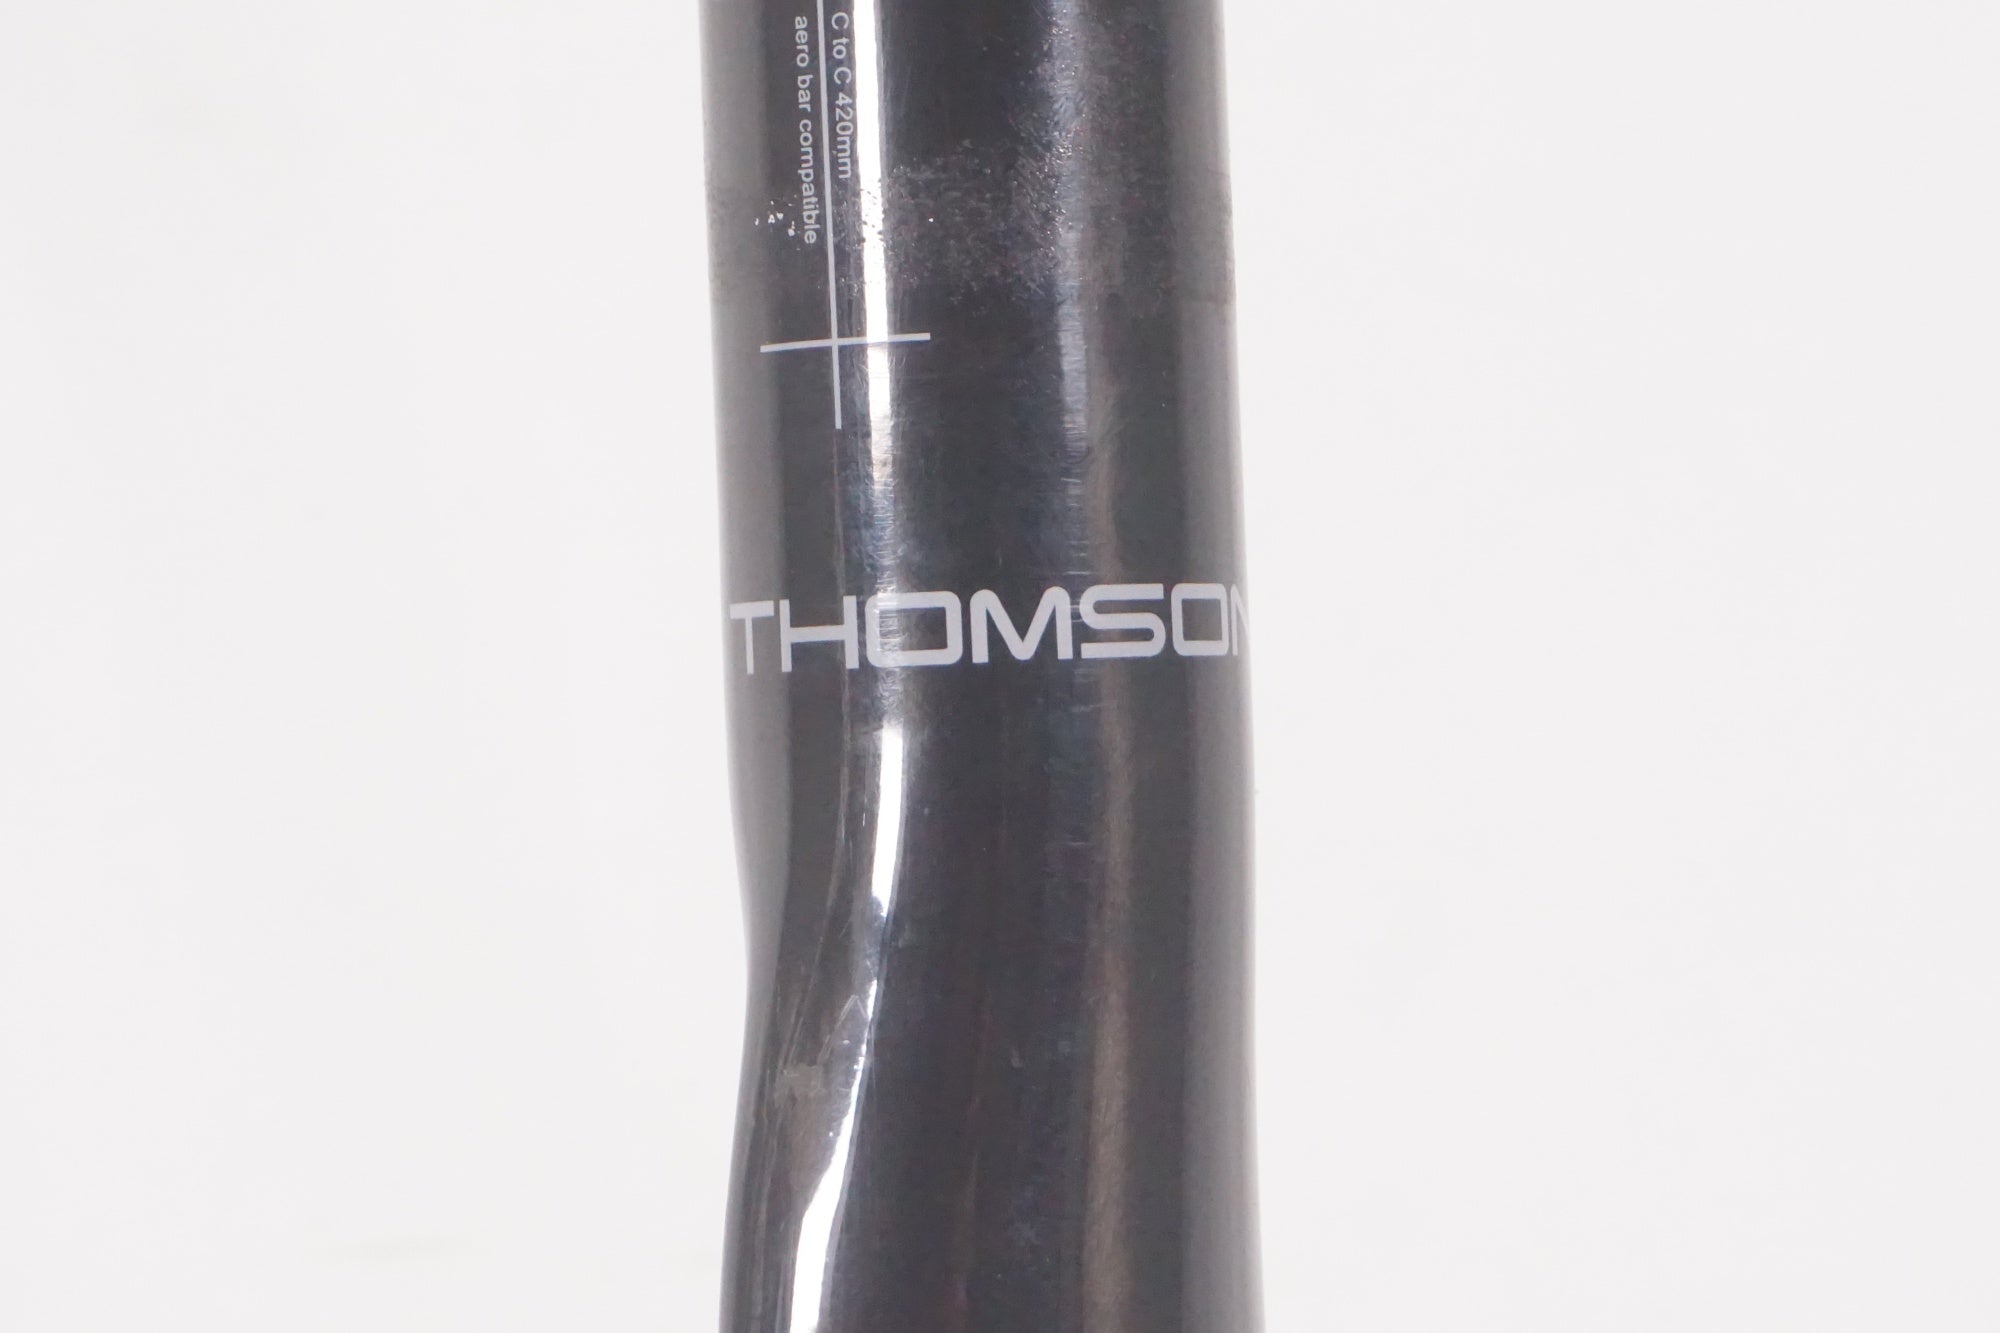 THOMSON 「トムソン」 CARBON DROP BAR AERO 420mm ハンドル / AKIBA店